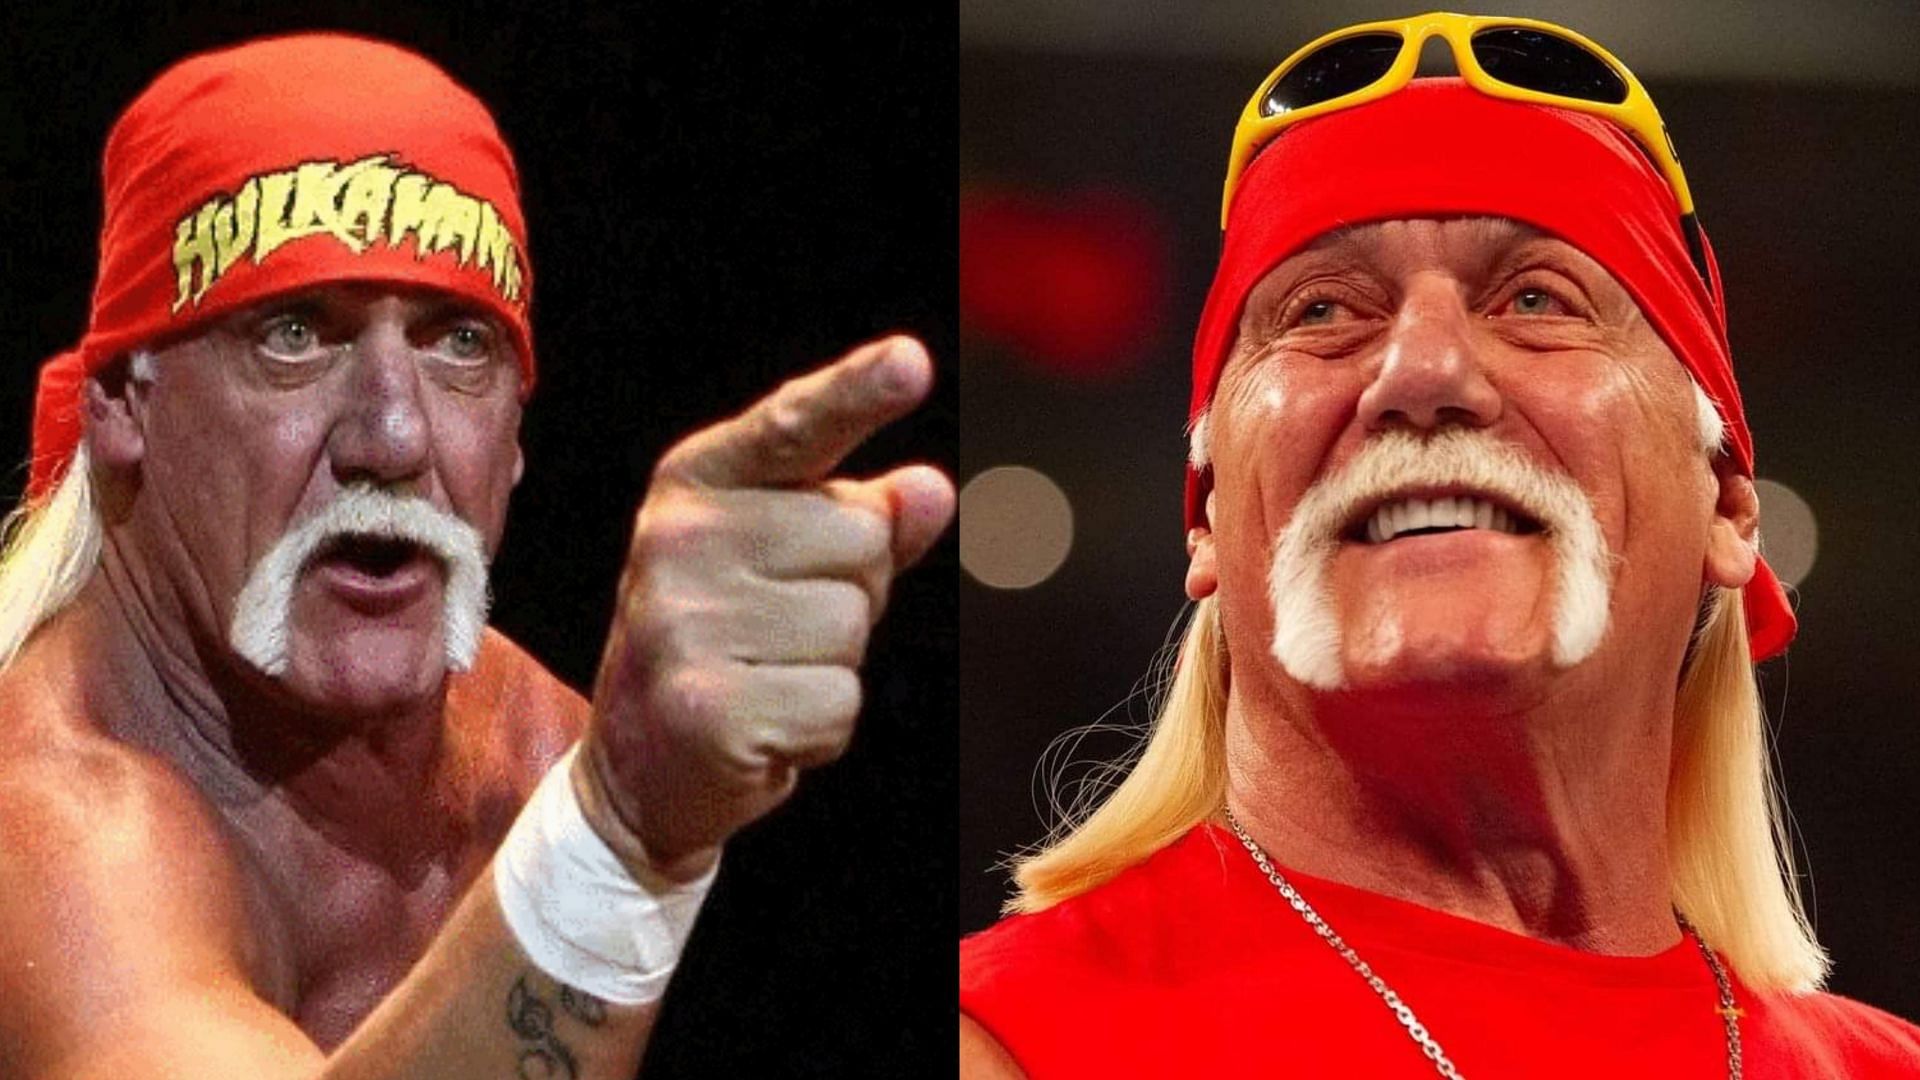 Hulk Hogan is one of WWE